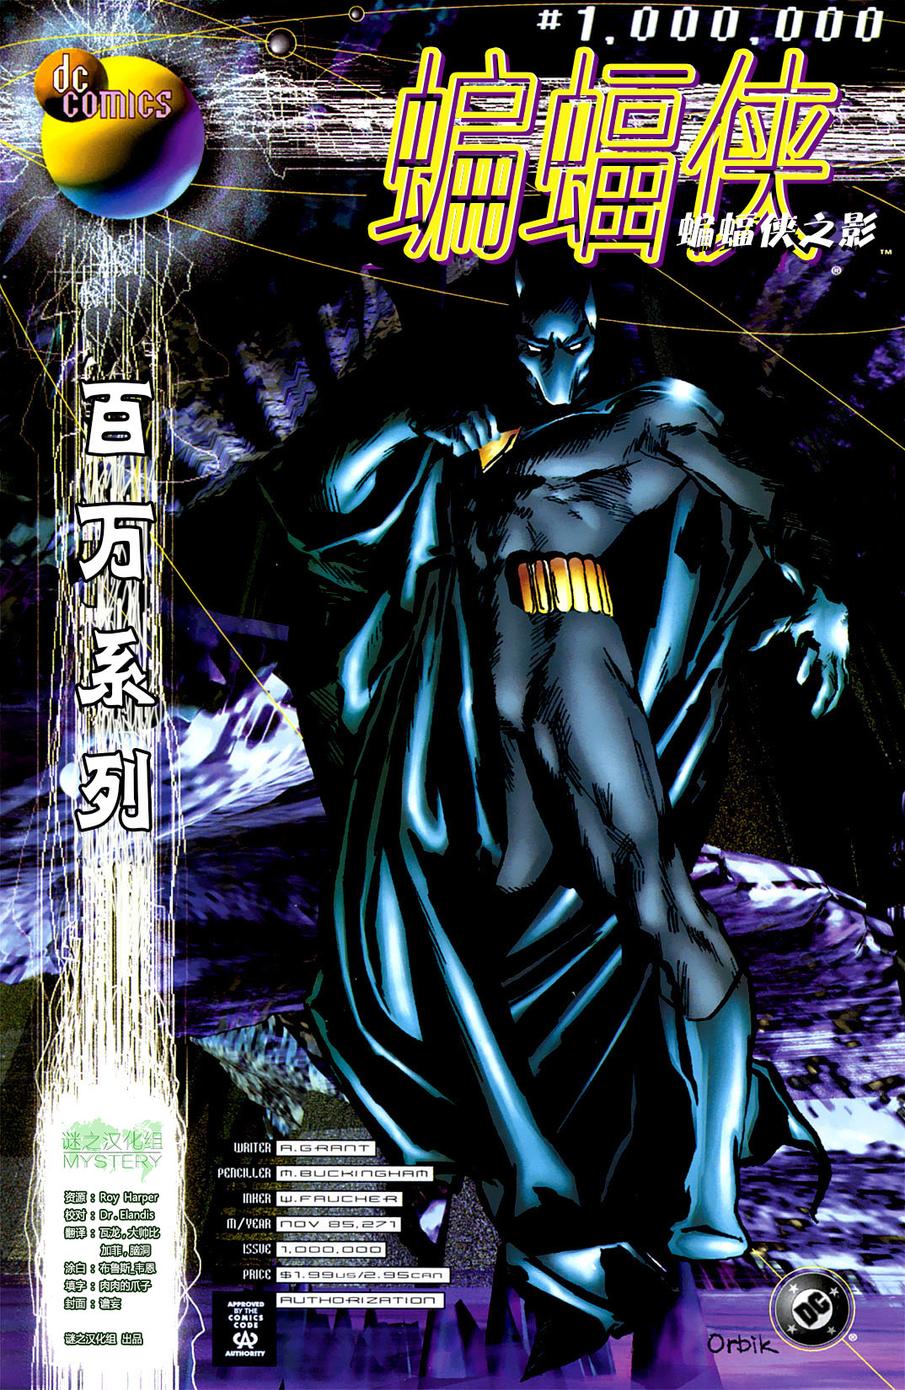 DC百萬系列 - 蝙蝠俠之影#1000000 - 1